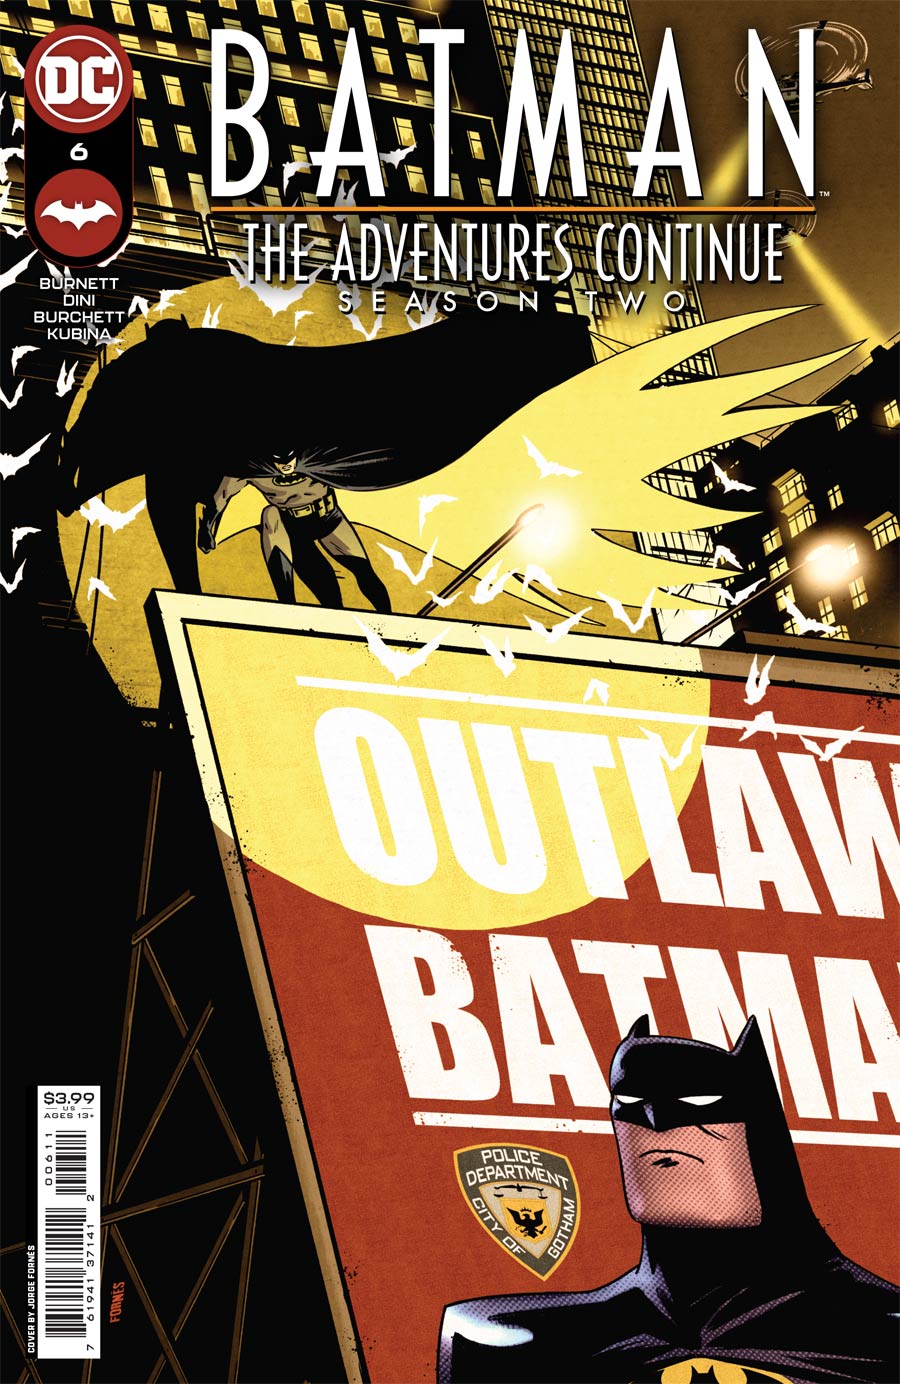 Batman The Adventures Continue Season II #6 Cover A Regular Jorge Fornes Cover